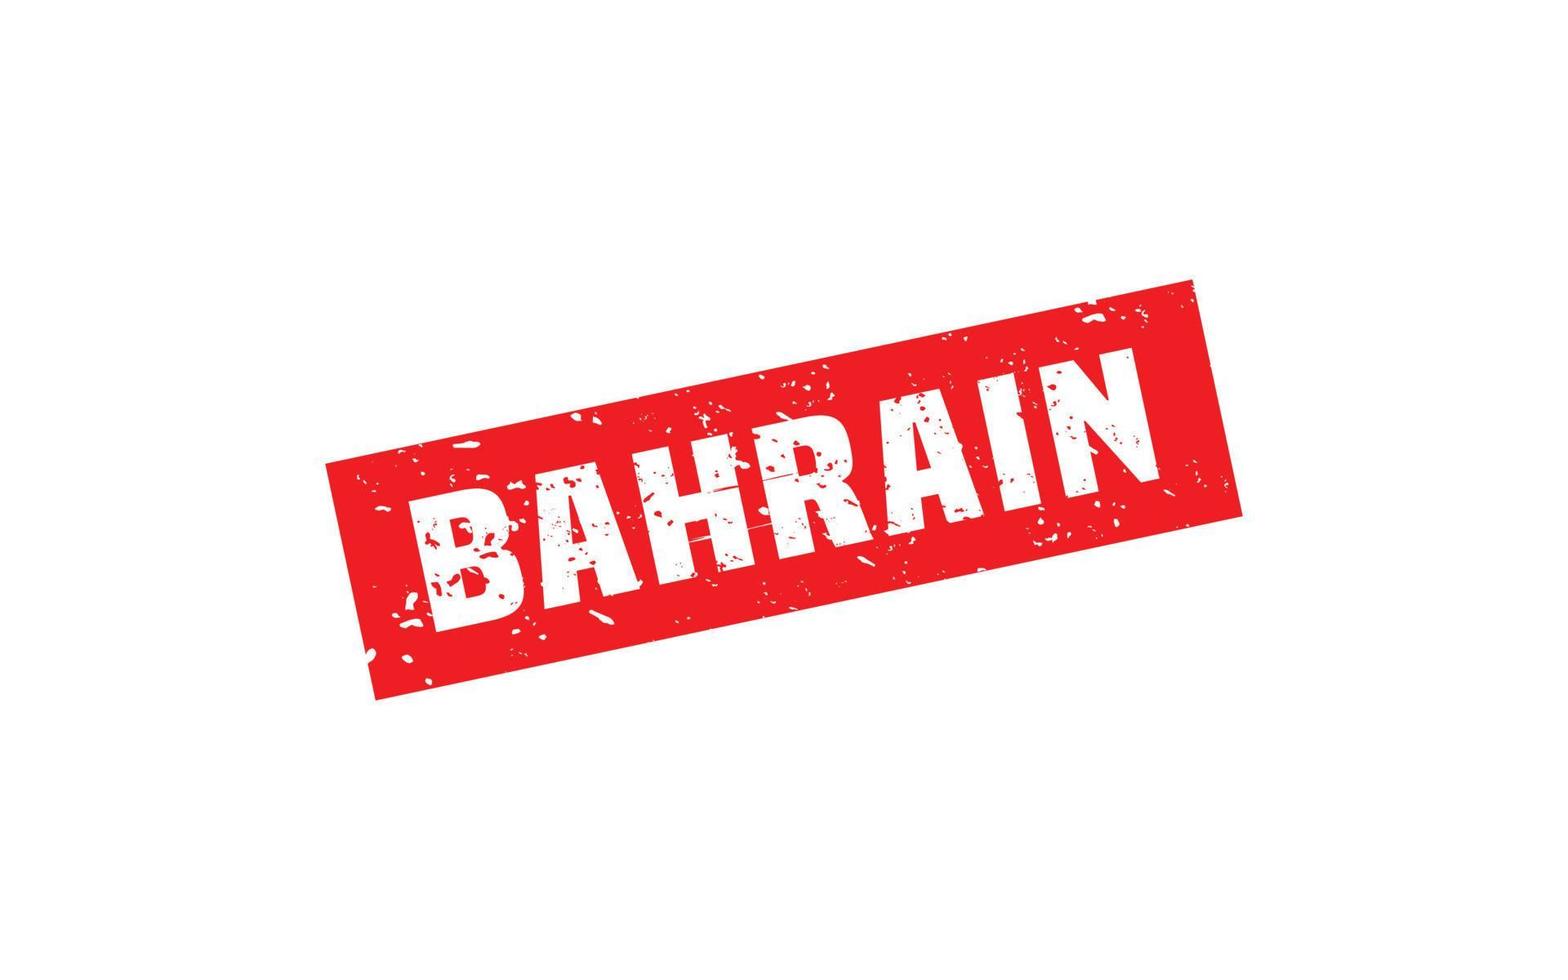 borracha de carimbo do bahrein com estilo grunge em fundo branco vetor